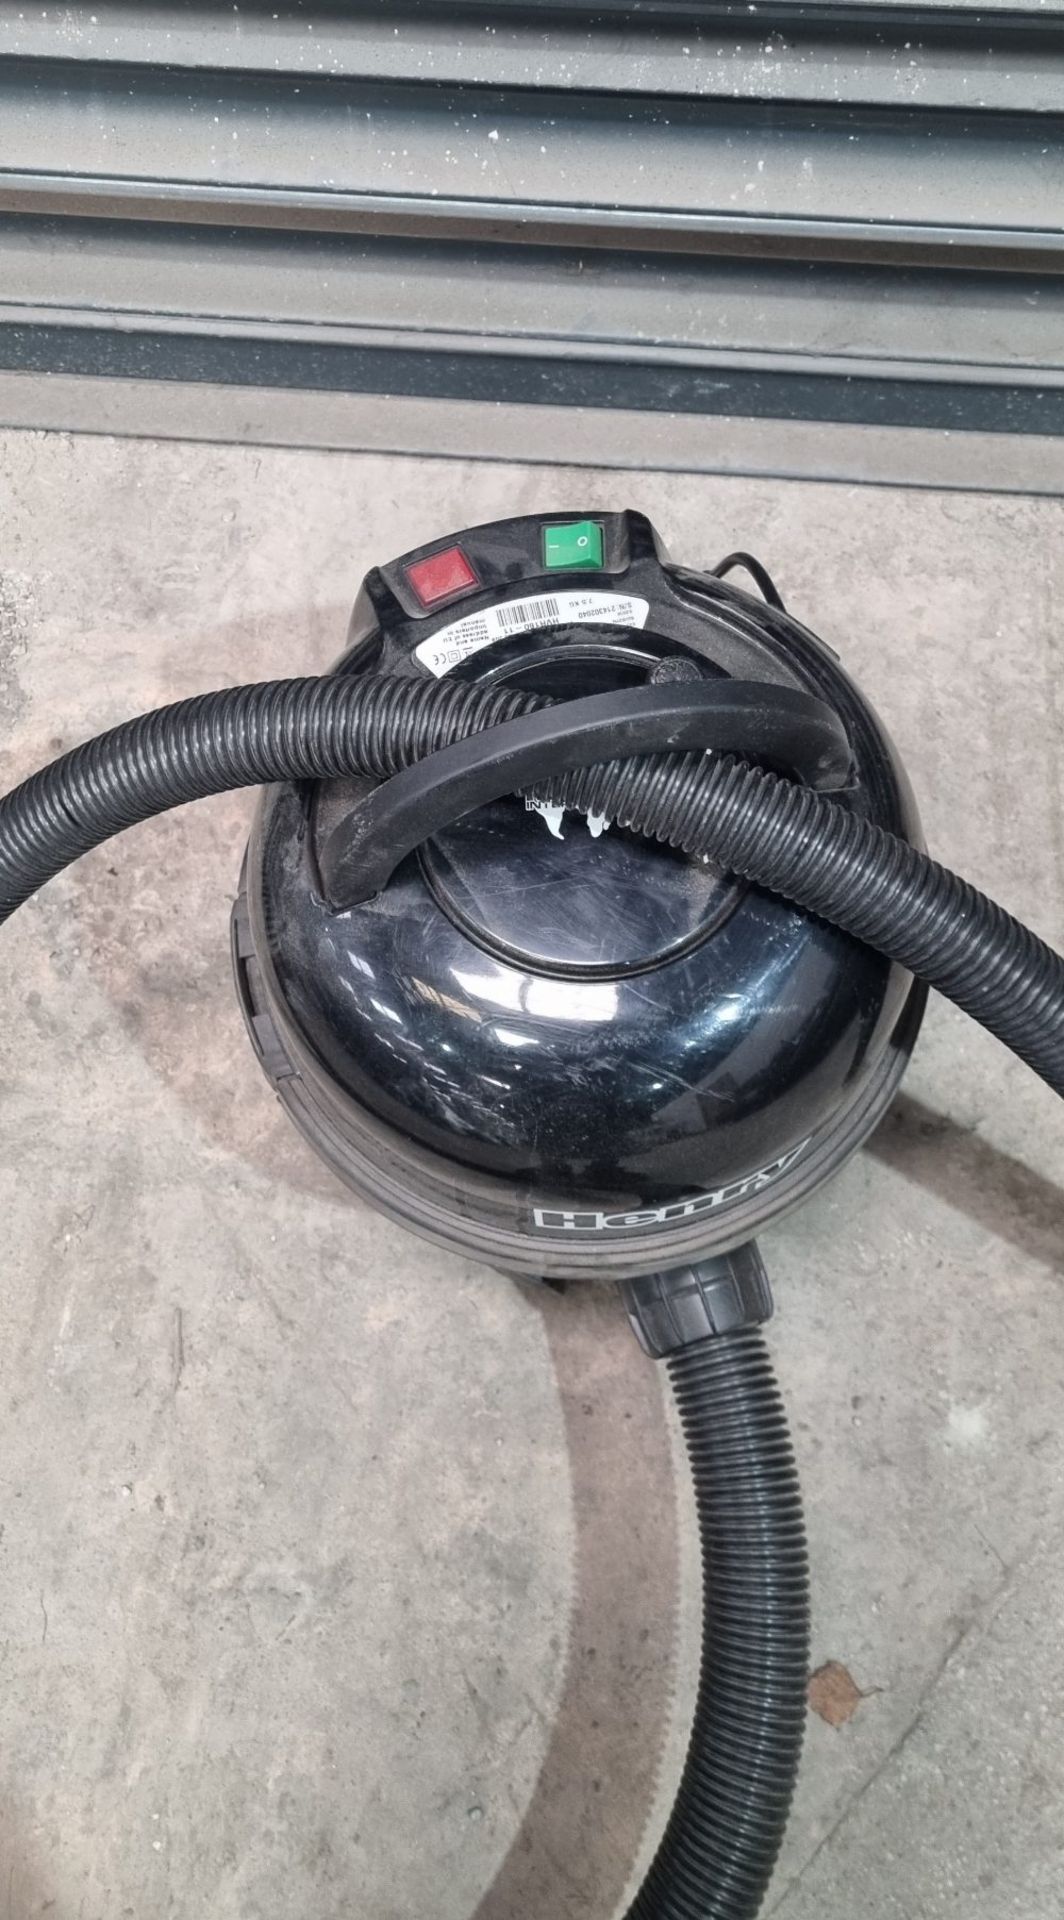 Henry HVR160-11 Vacuum Cleaner - Image 2 of 4